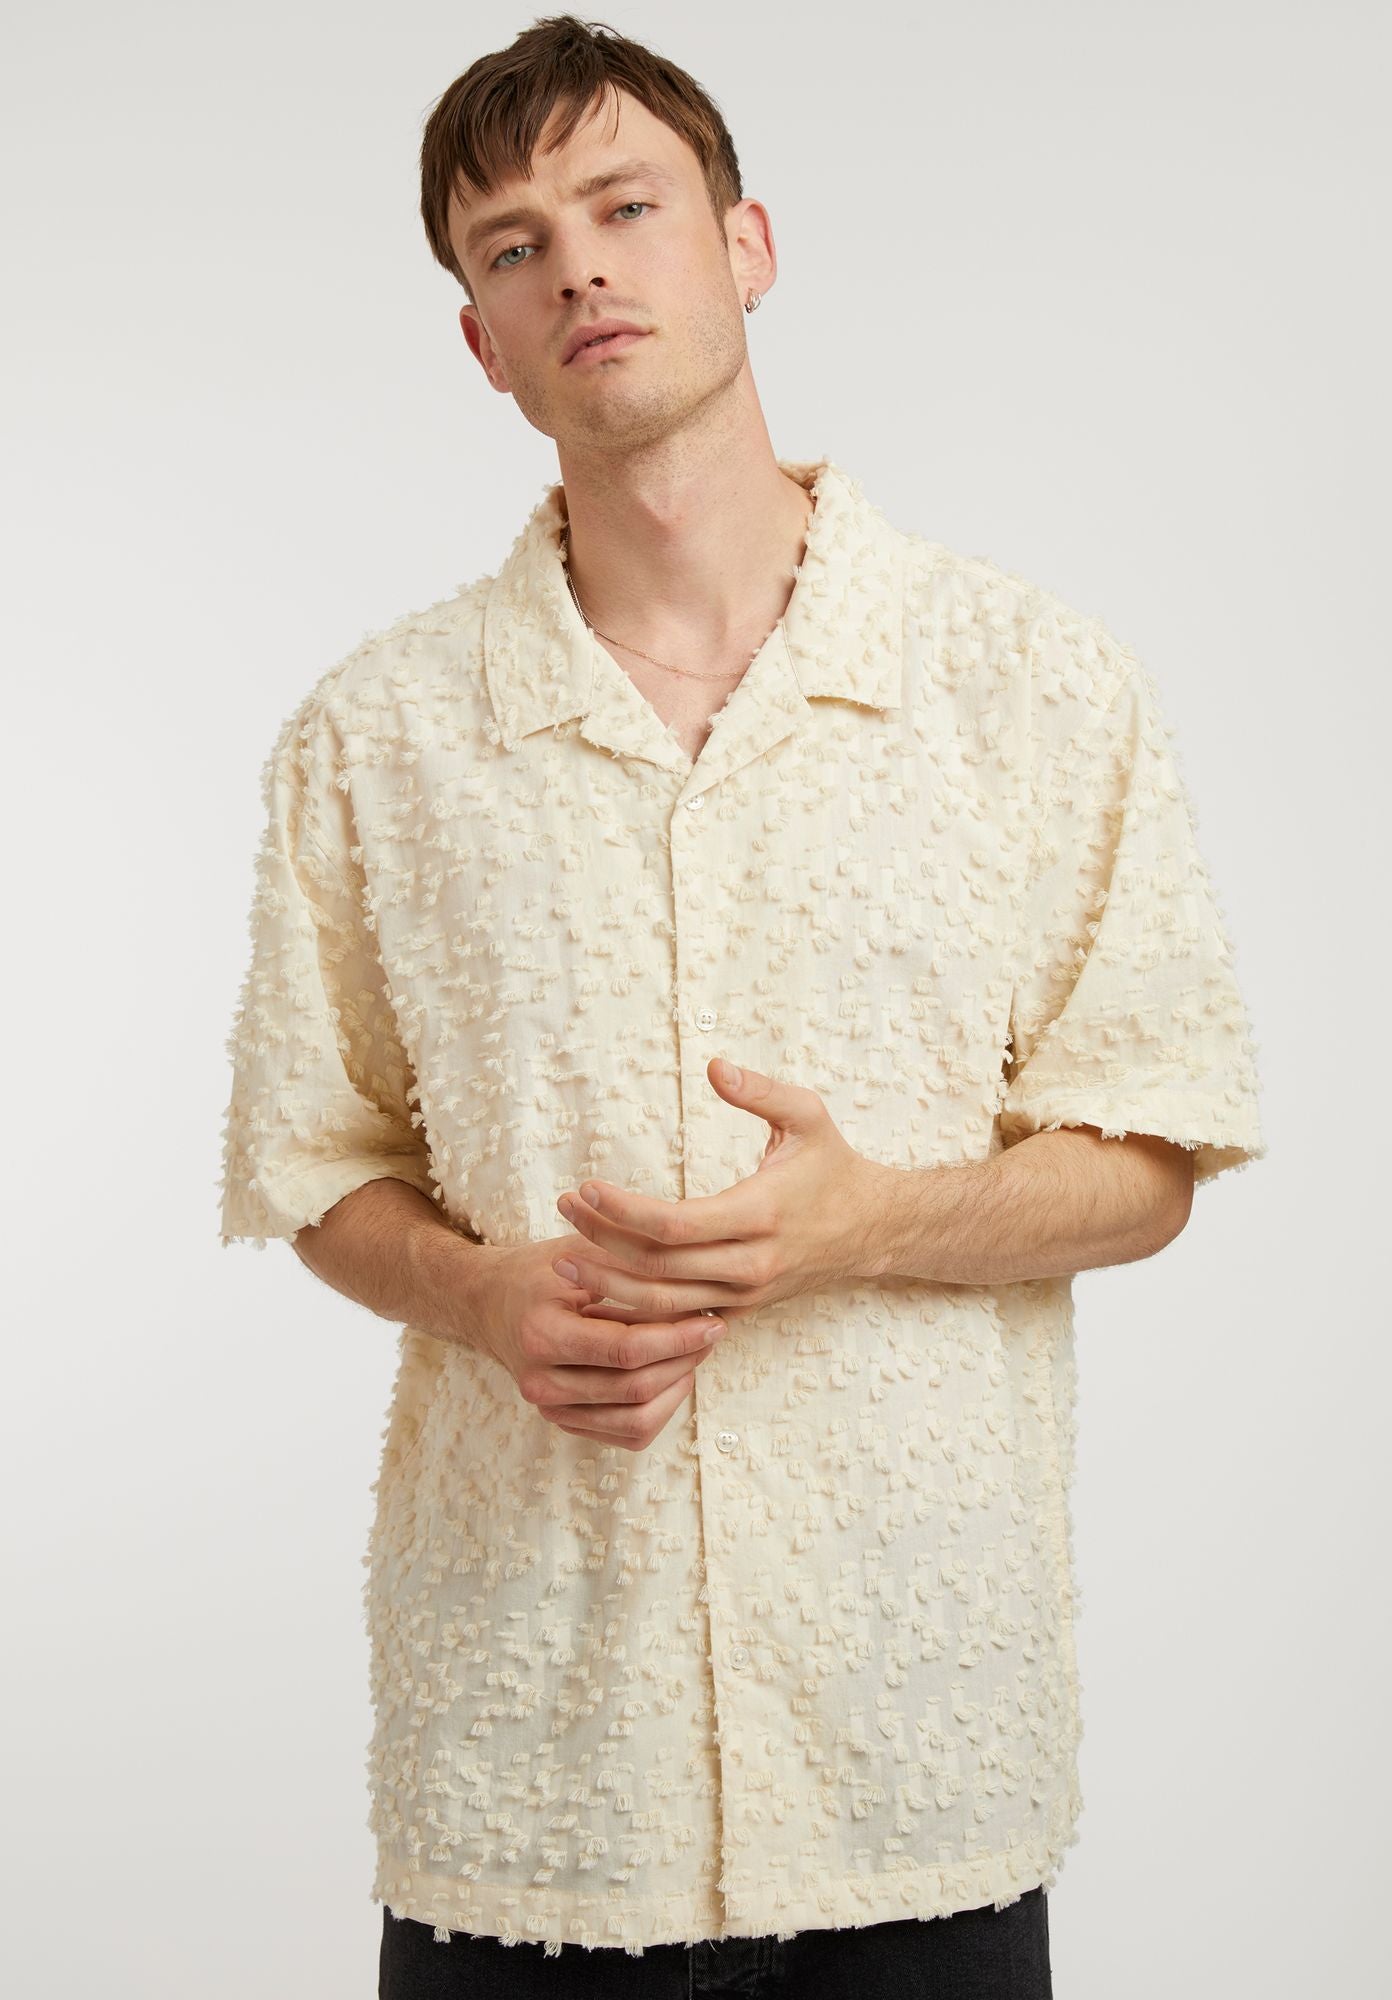 Bowling shirt in cream made of organic cotton by ThokkThokk (S)